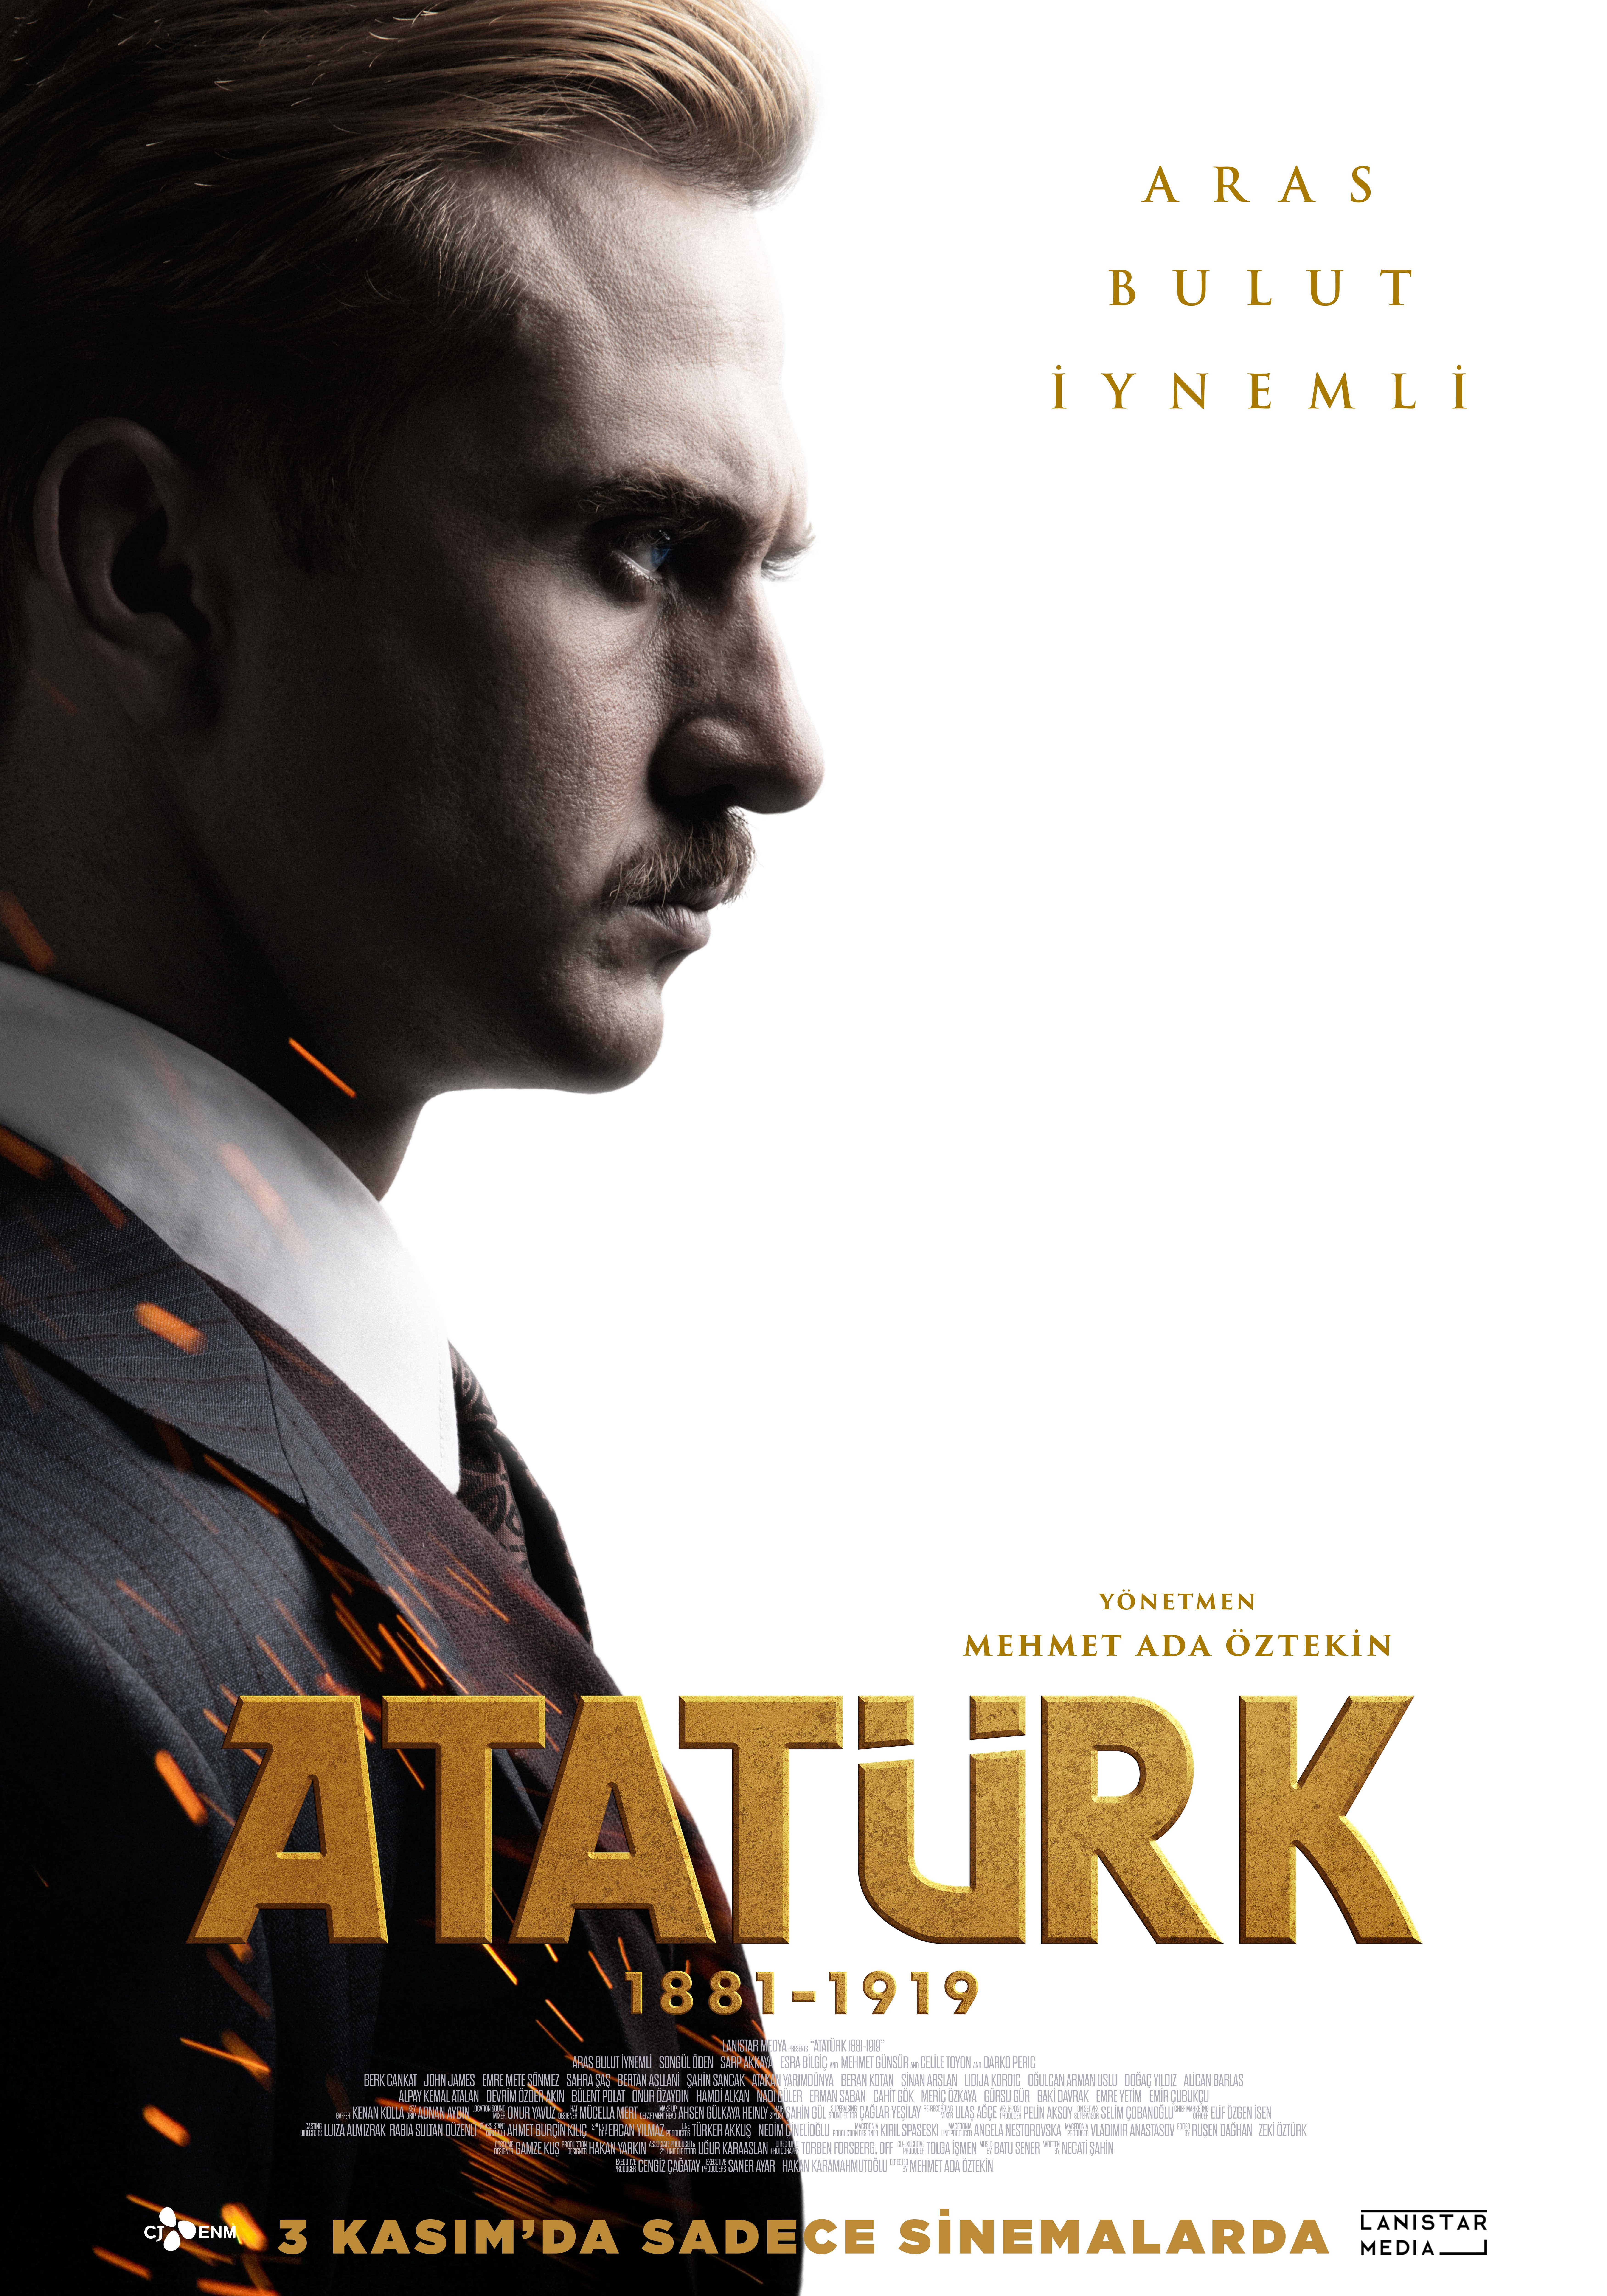 Atatürk 1881 - 1919 (1. Film) Poster